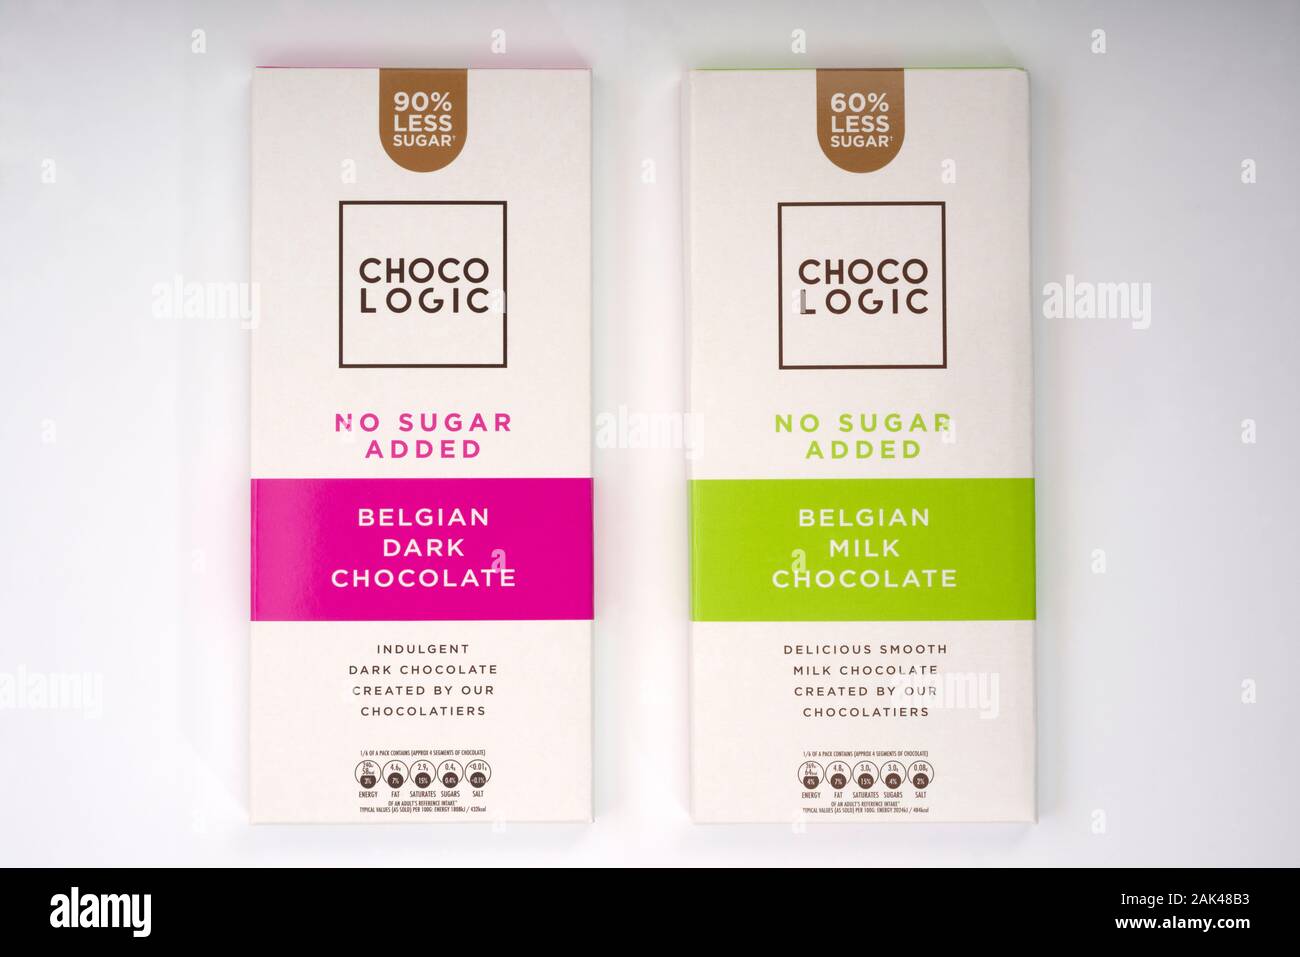 Choco Logic low sugar chocolate Stock Photo